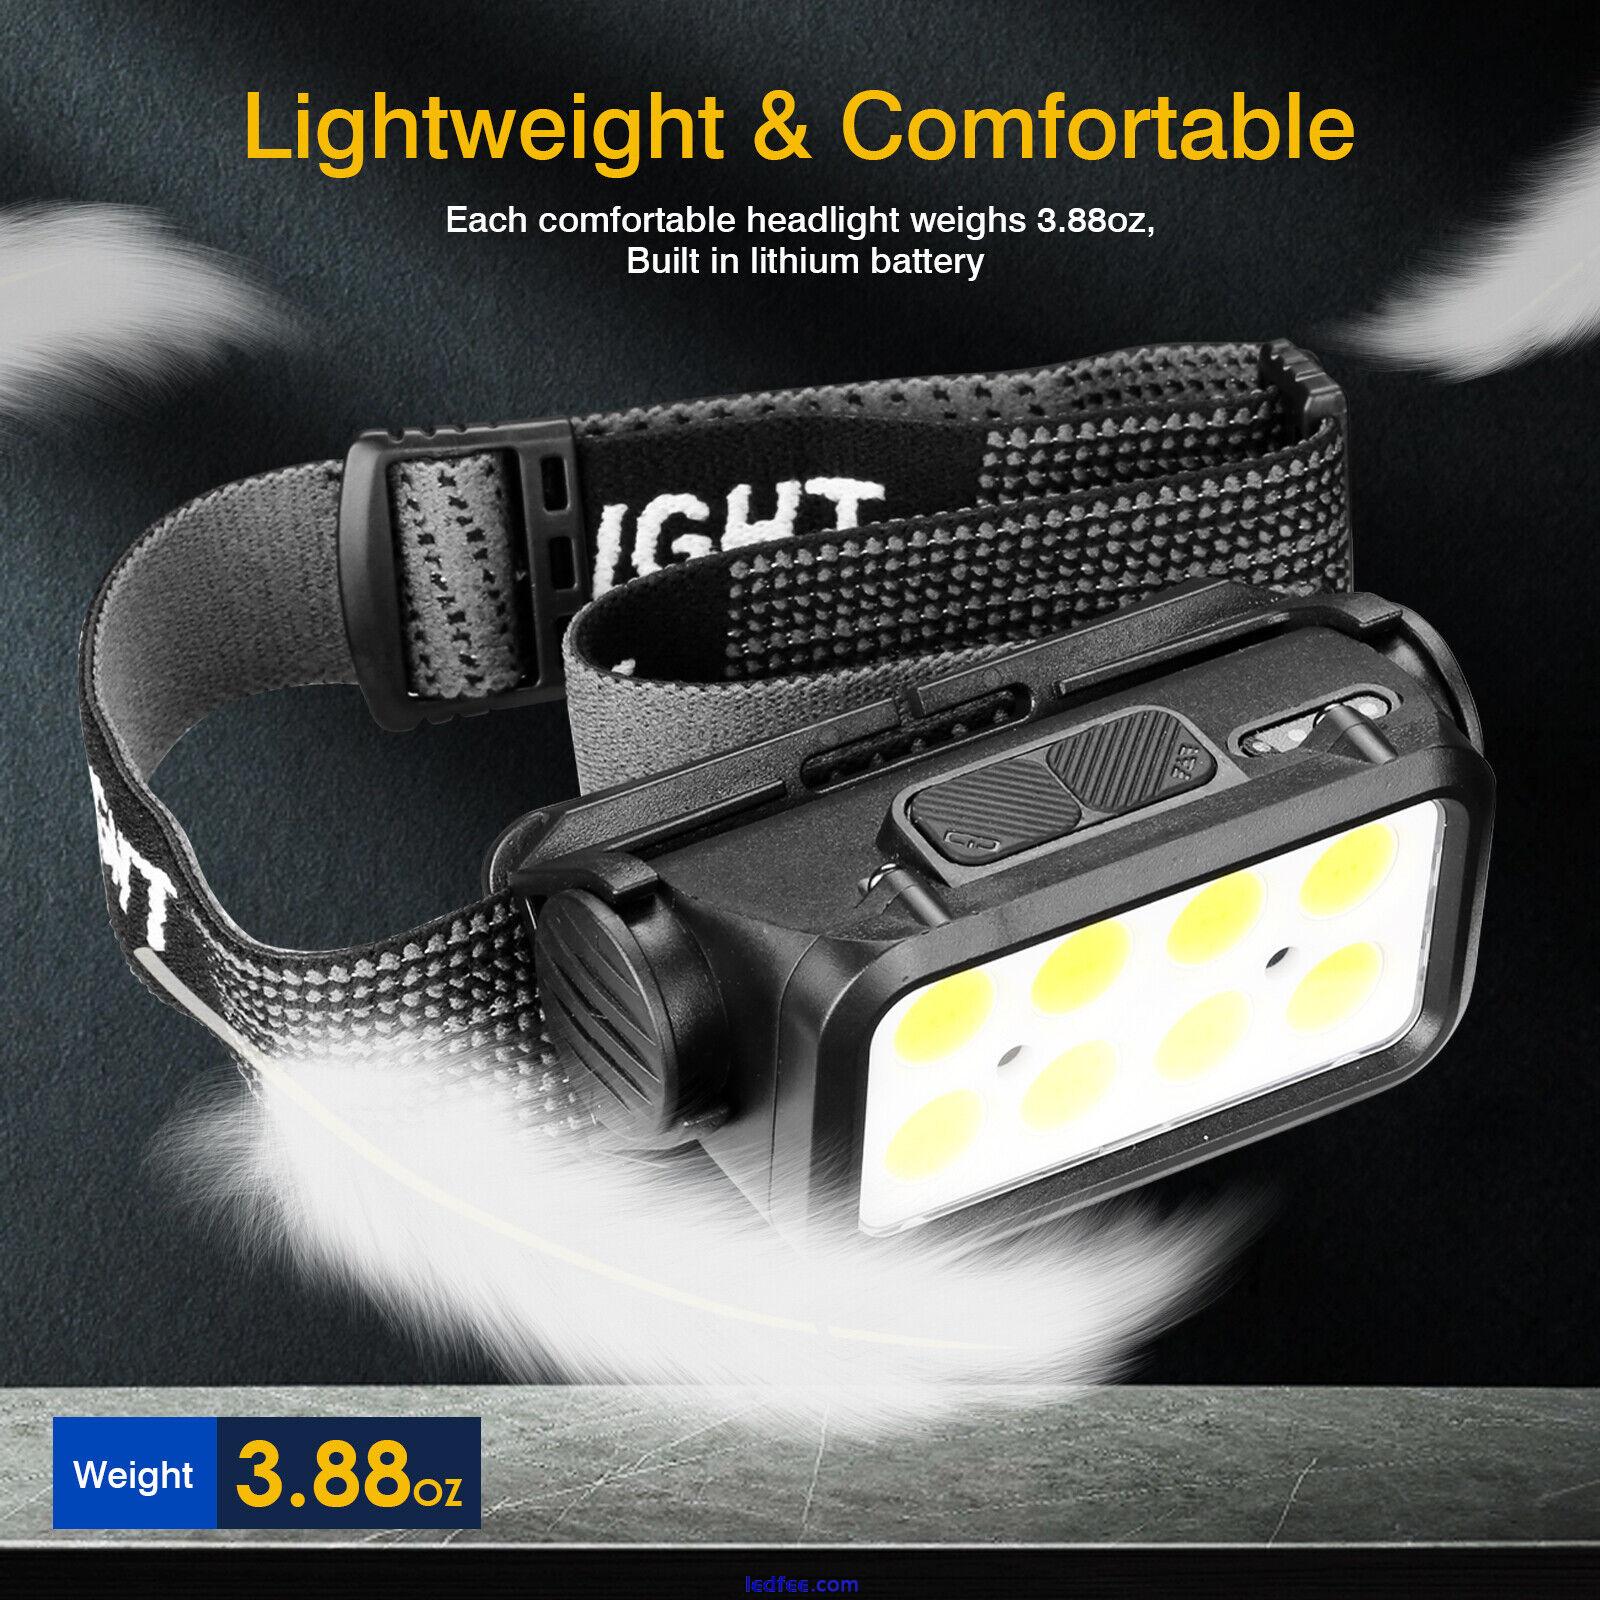 COB LED Headlamp USB Rechargeable Headlight Torch Work Light Bar Head Band Lamp 4 